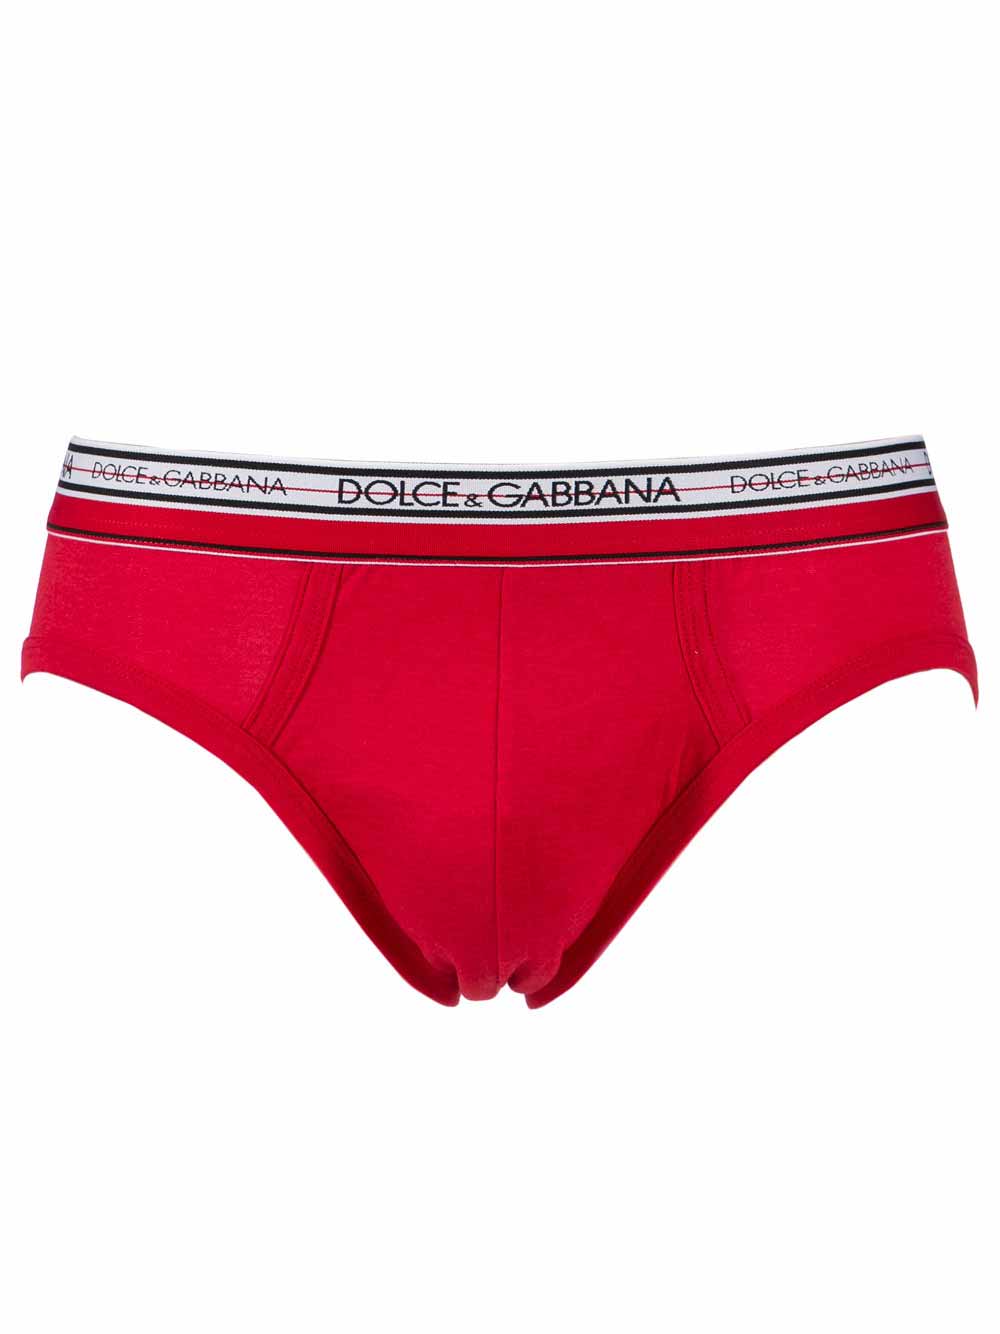 Slip Uomo Dolce \u0026 Gabbana Rosso con Elastico Logato - N3B94JHU7AER0365 |  eBay